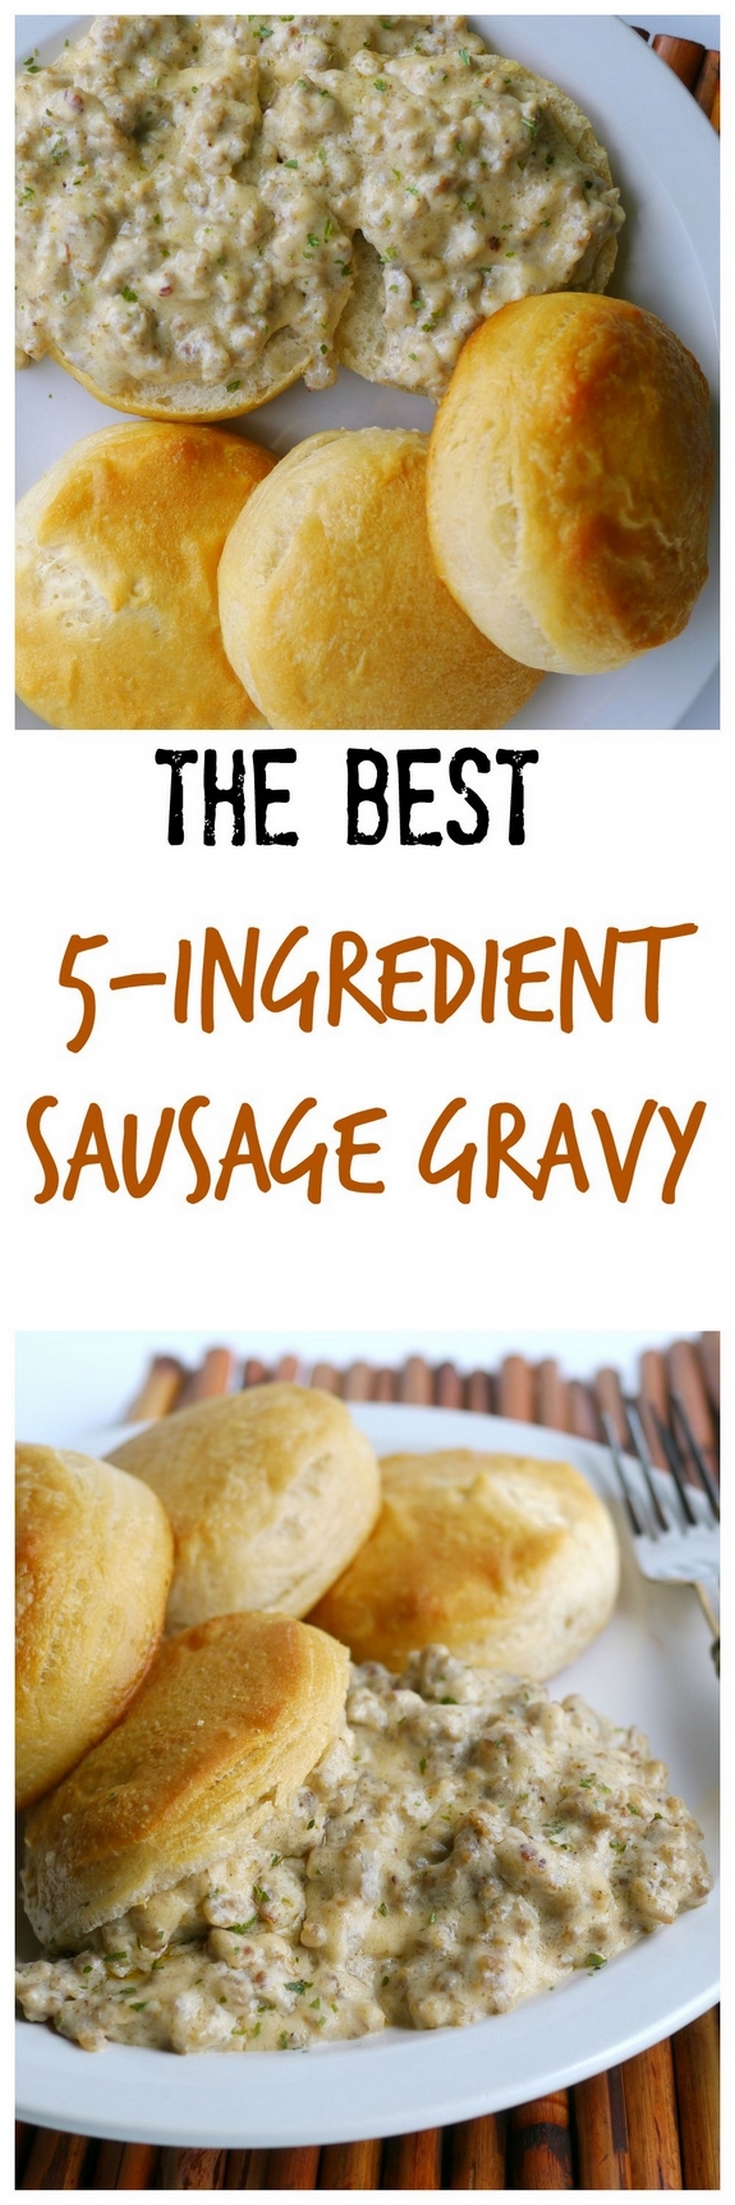 The Best 5-Ingredient Sausage Gravy for Biscuits + VIDEO